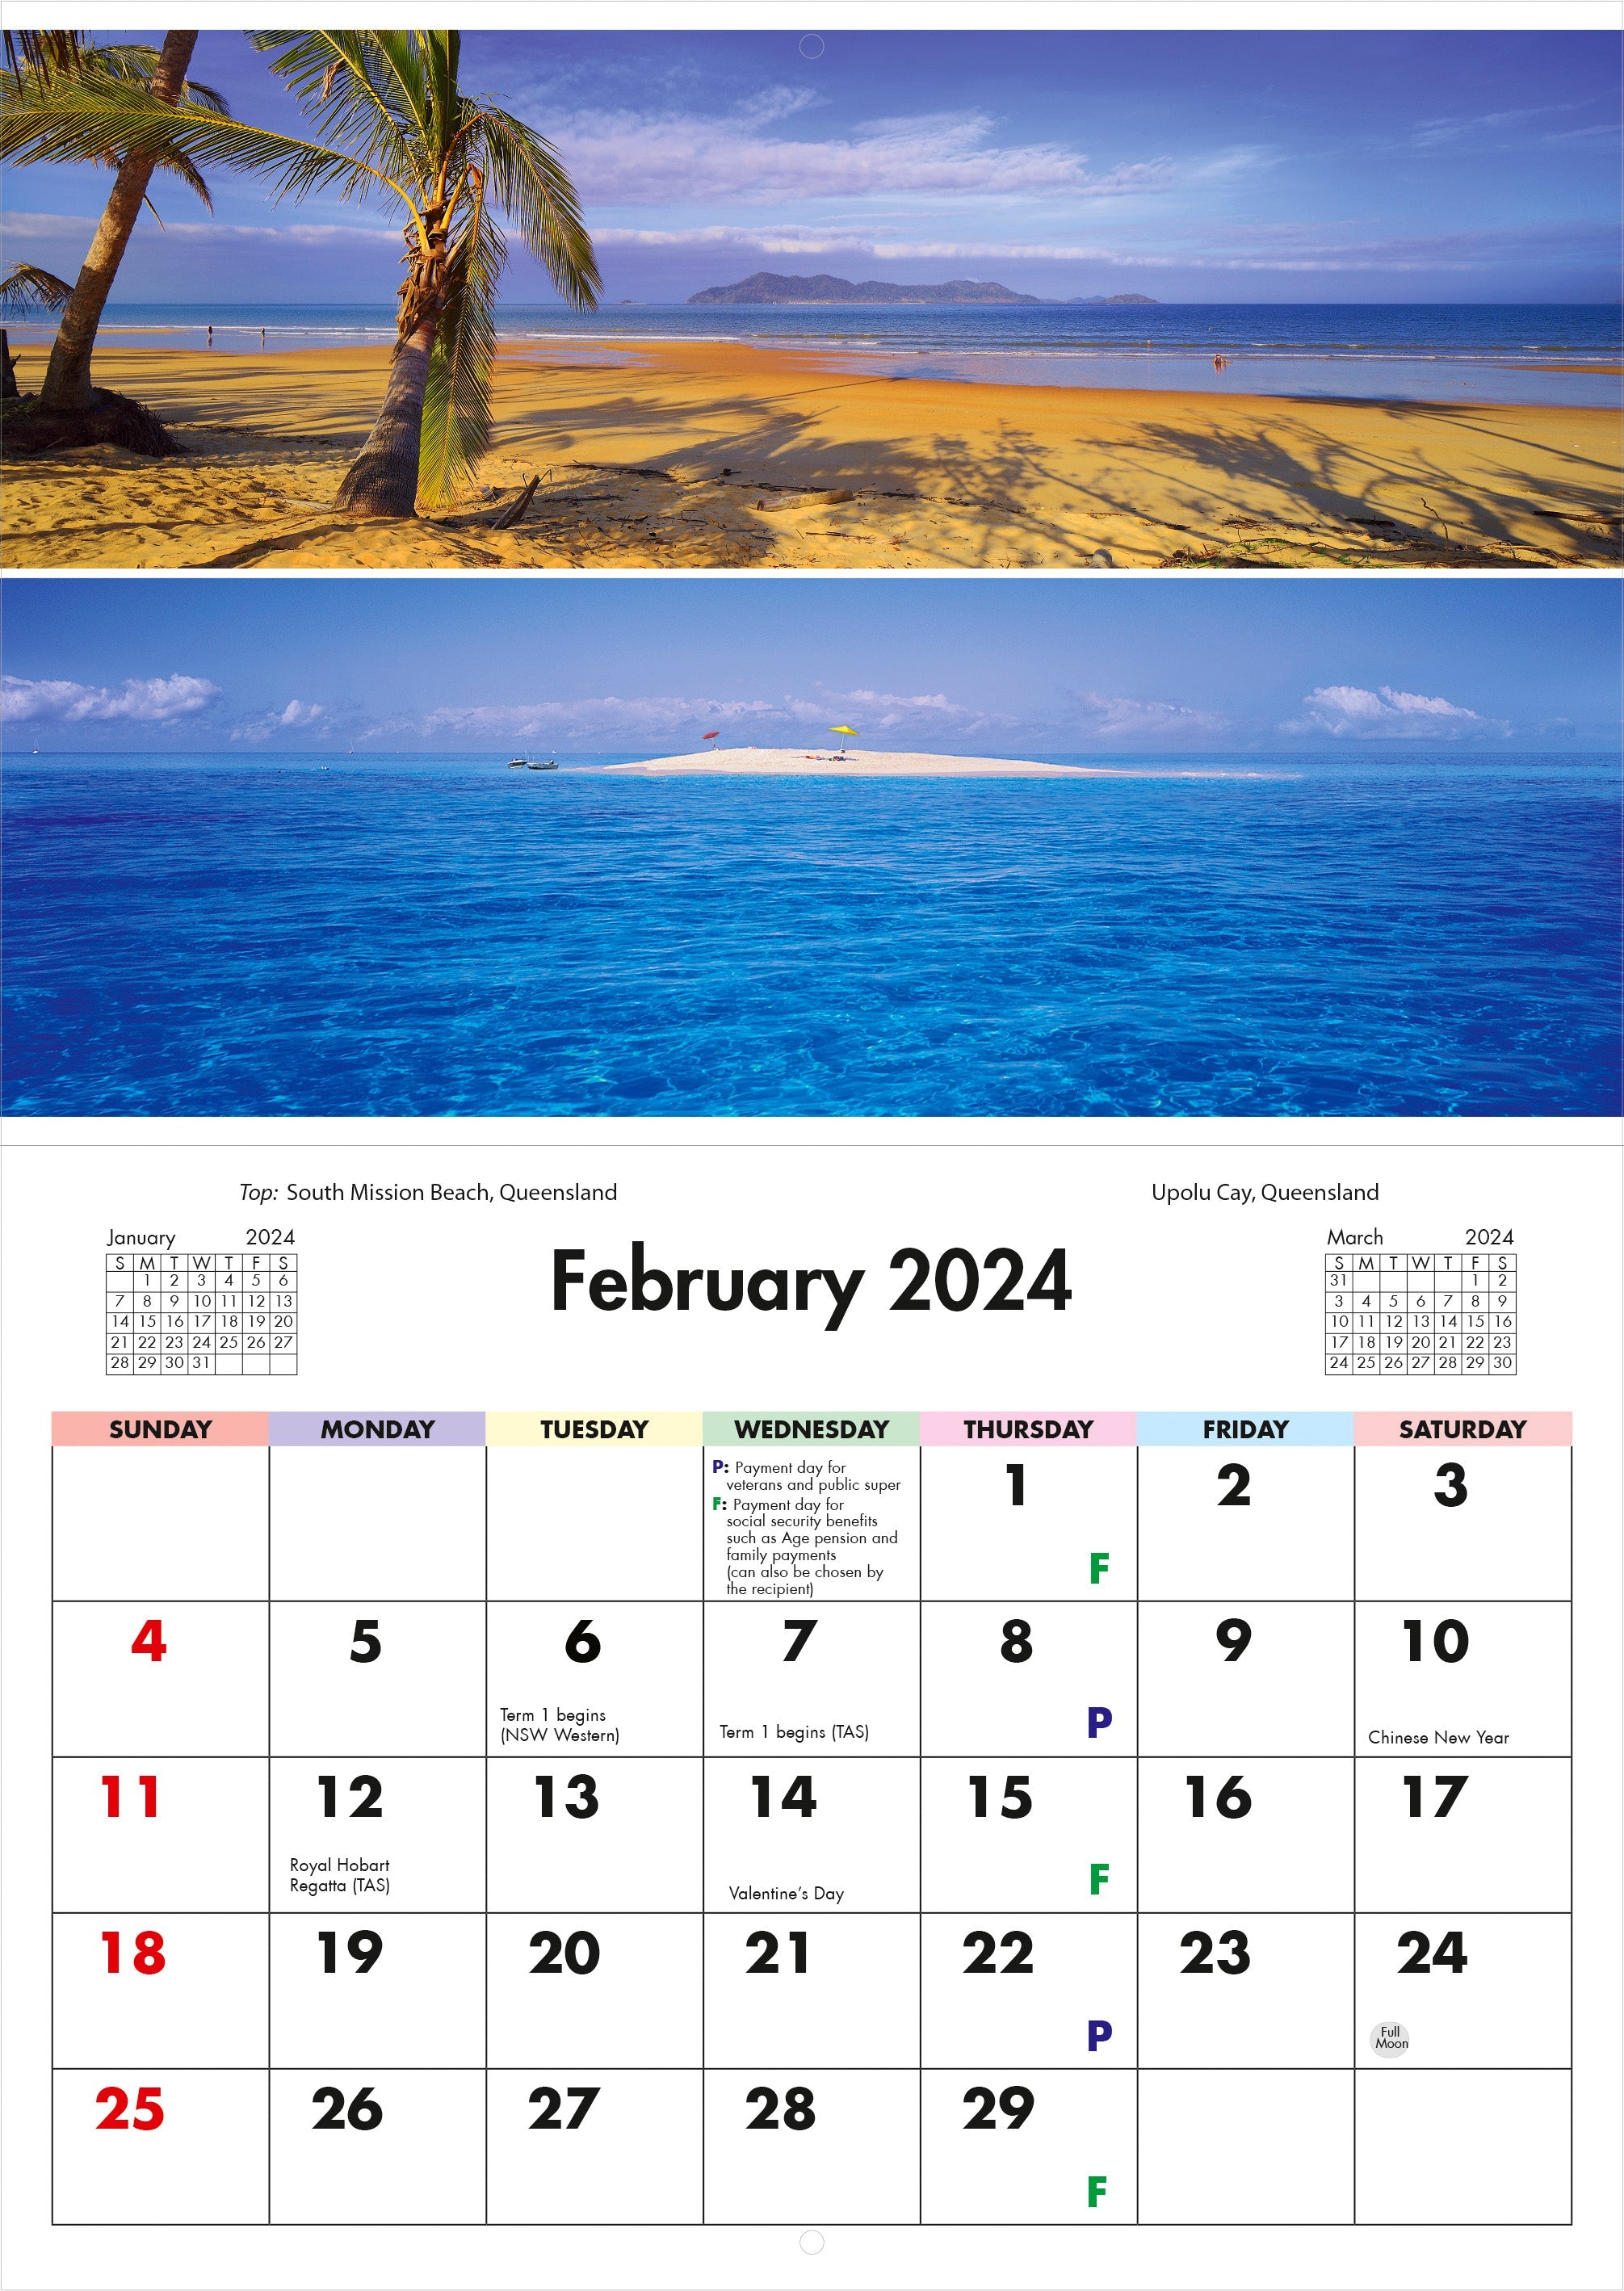 2024 Australian Beaches - Horizontal Wall Calendar